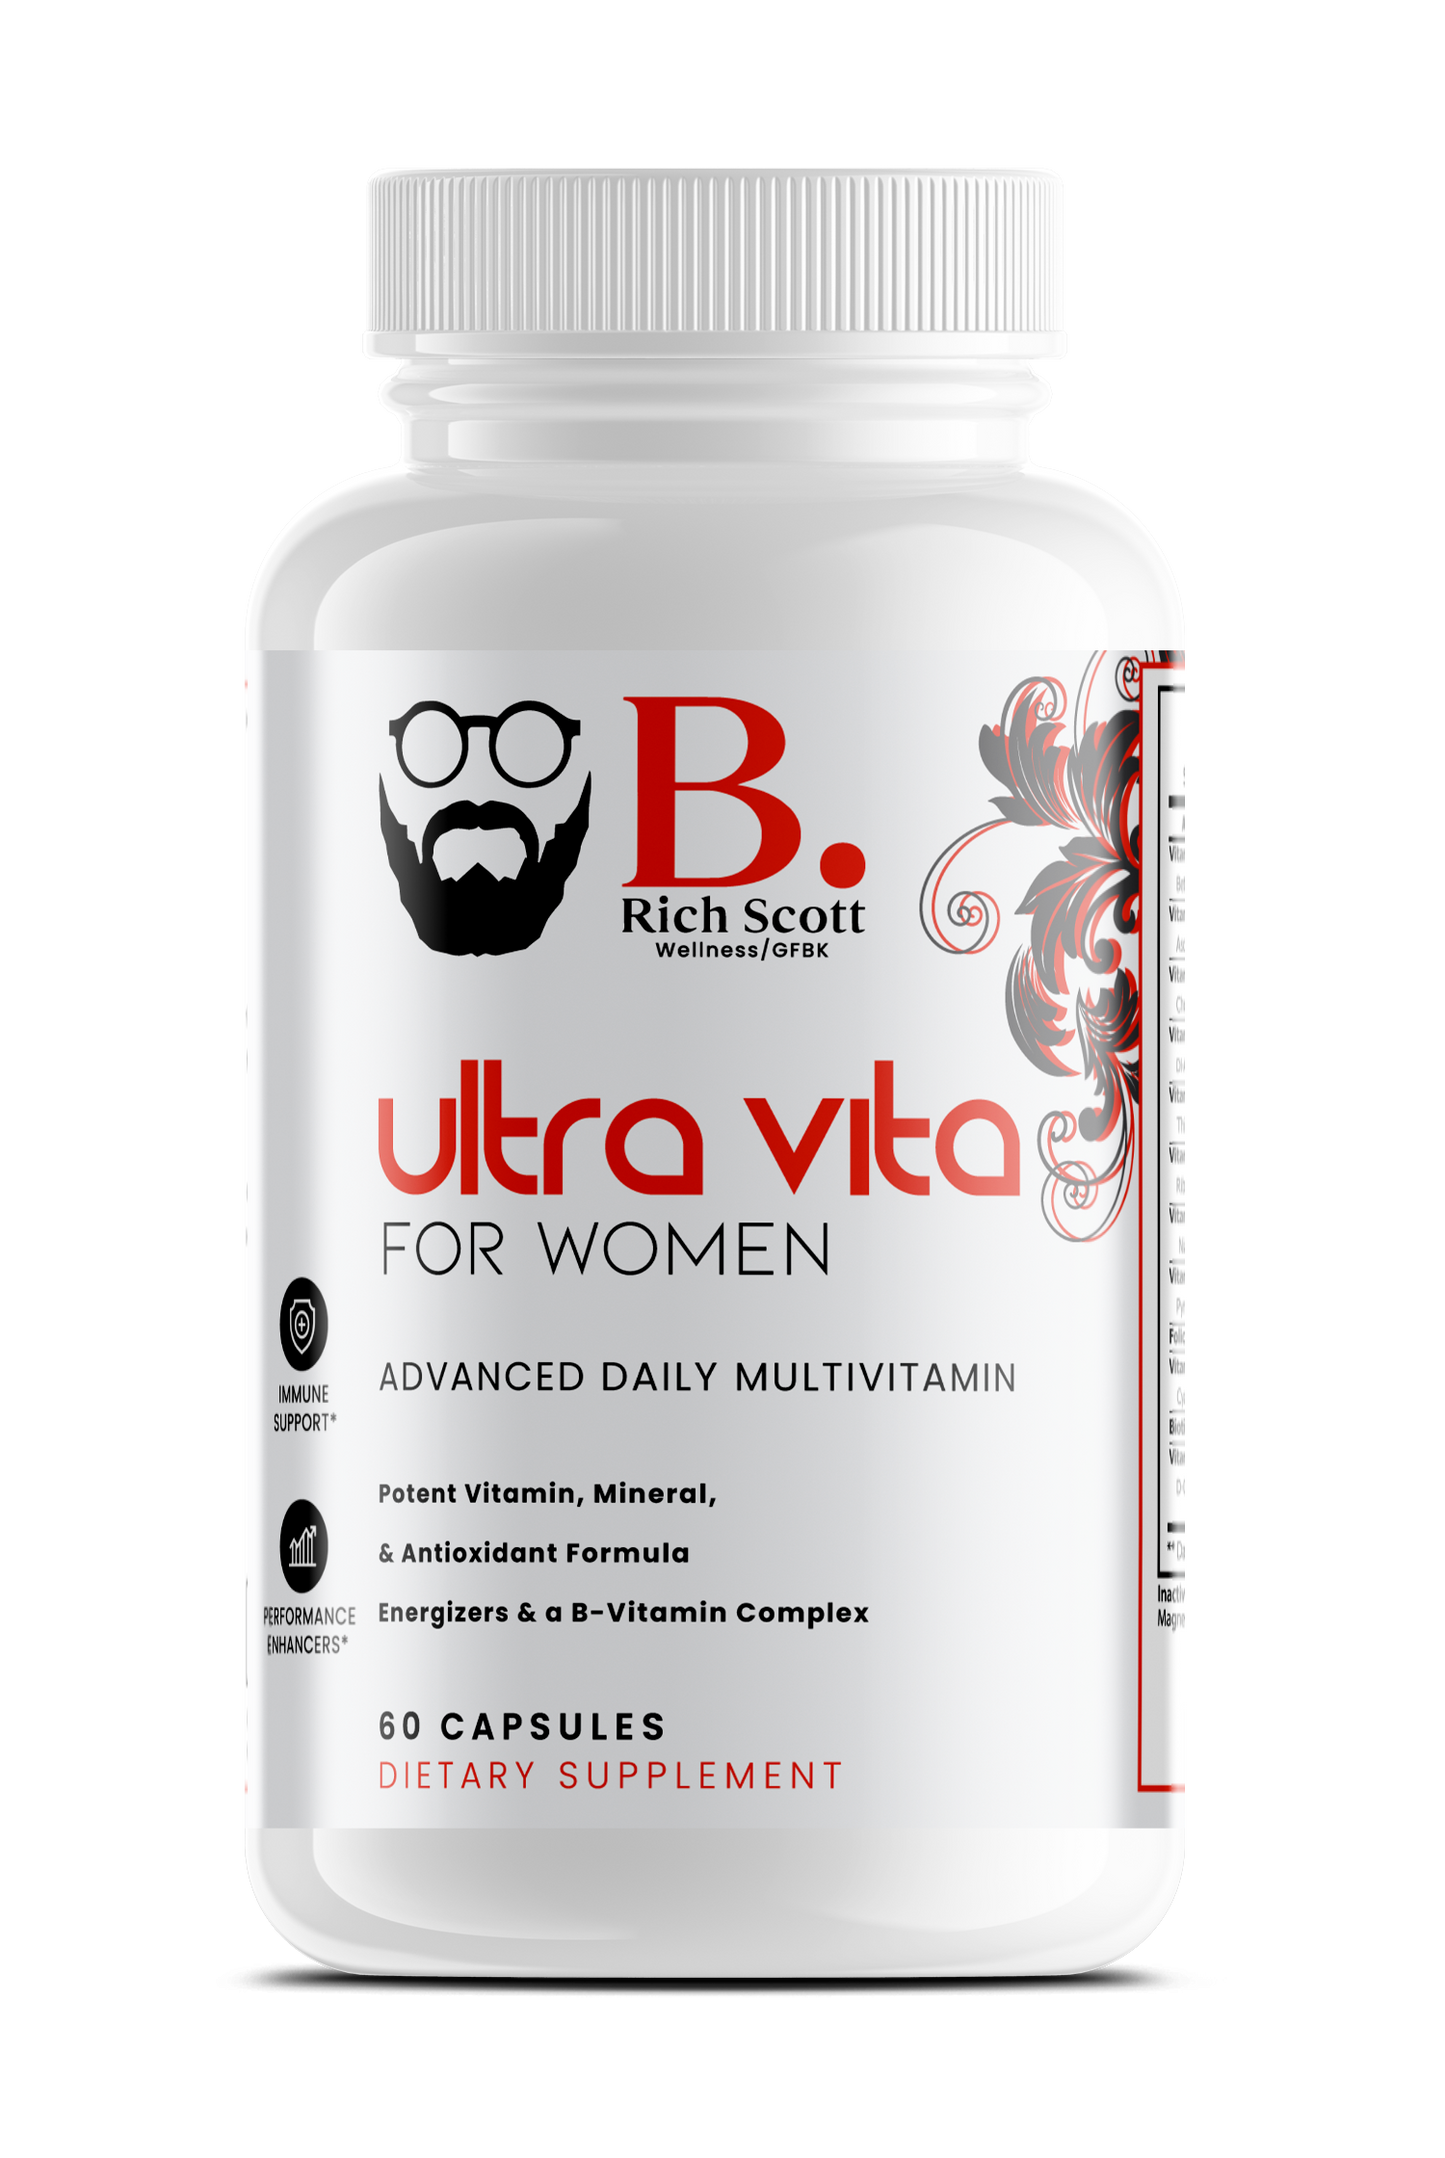 Ultra Vita for Women (Complete Vitamin for Women)